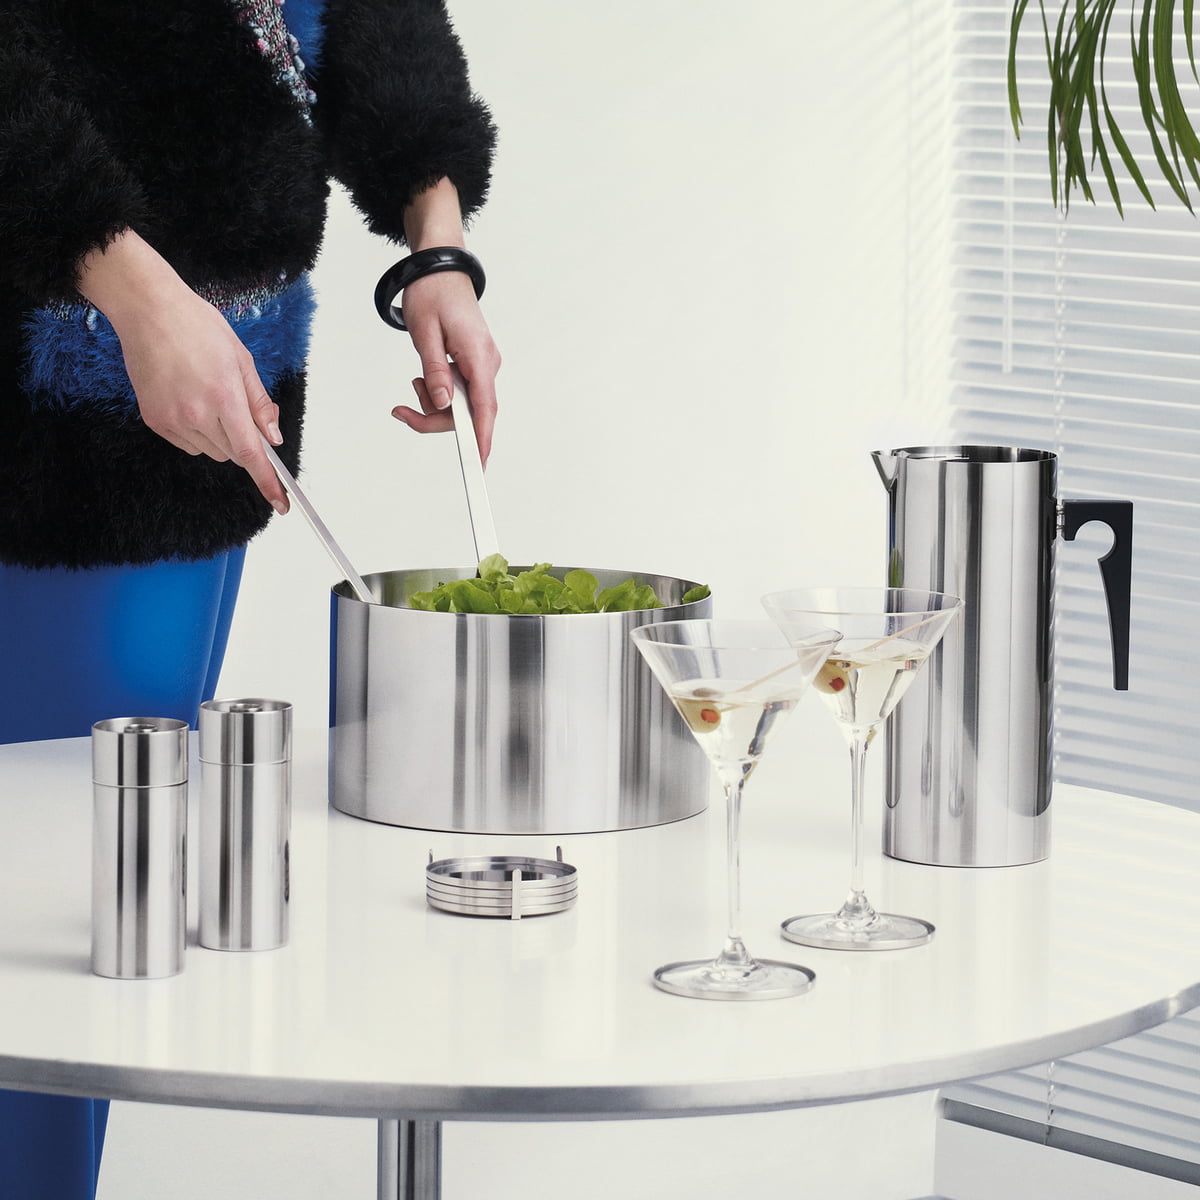 Trio Dansk Cookware Pots Enamel Kitchen Danish Mod Scandinavian